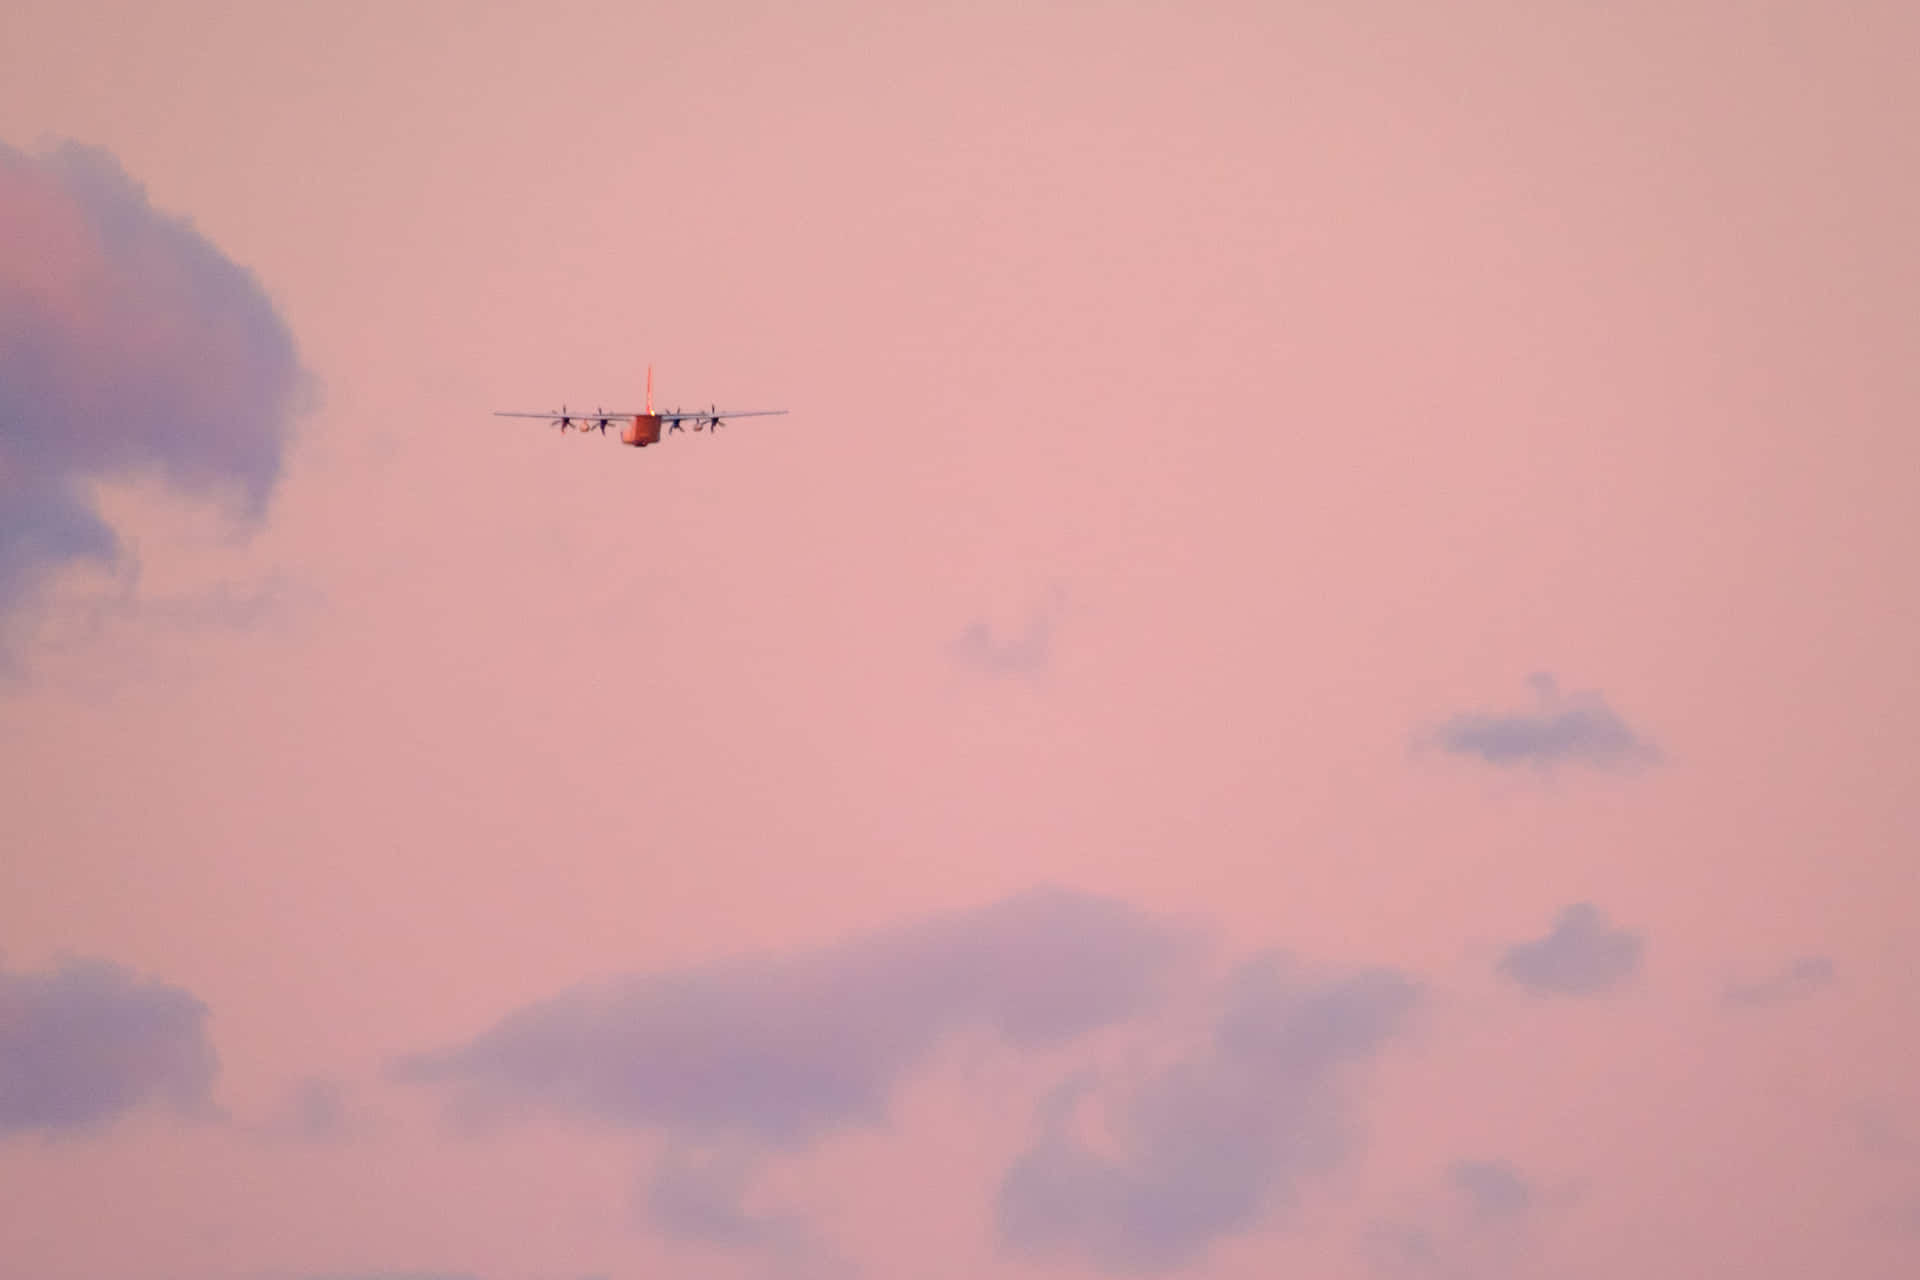 Enjoy a beautiful sunset flight with Pink Plane Wallpaper